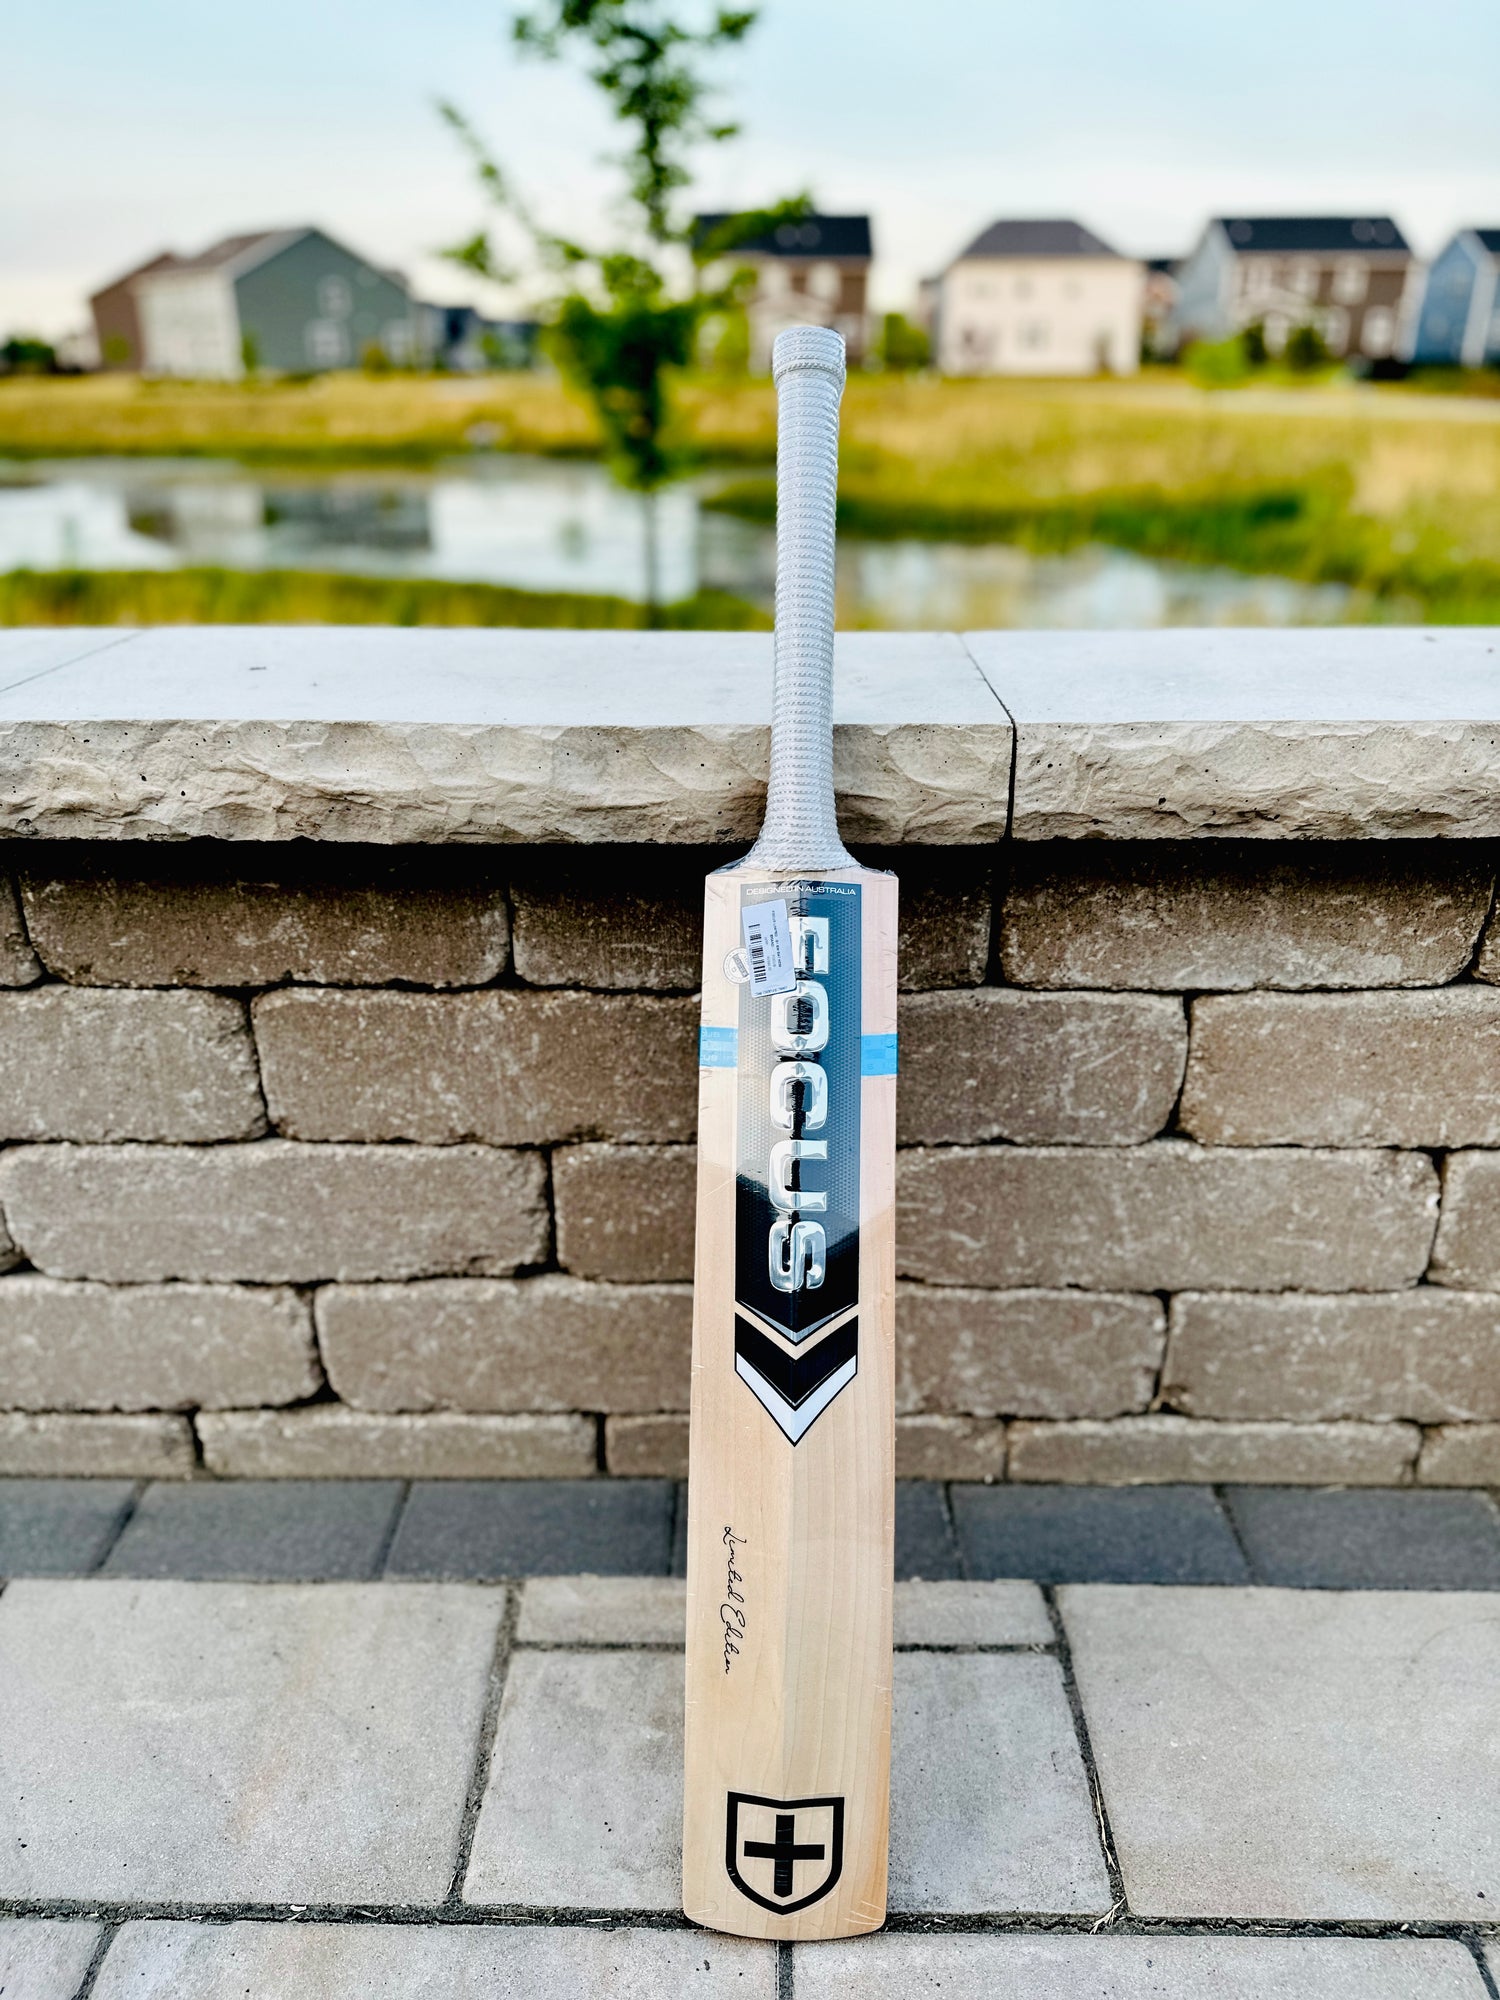 focus raw limited cricket bat